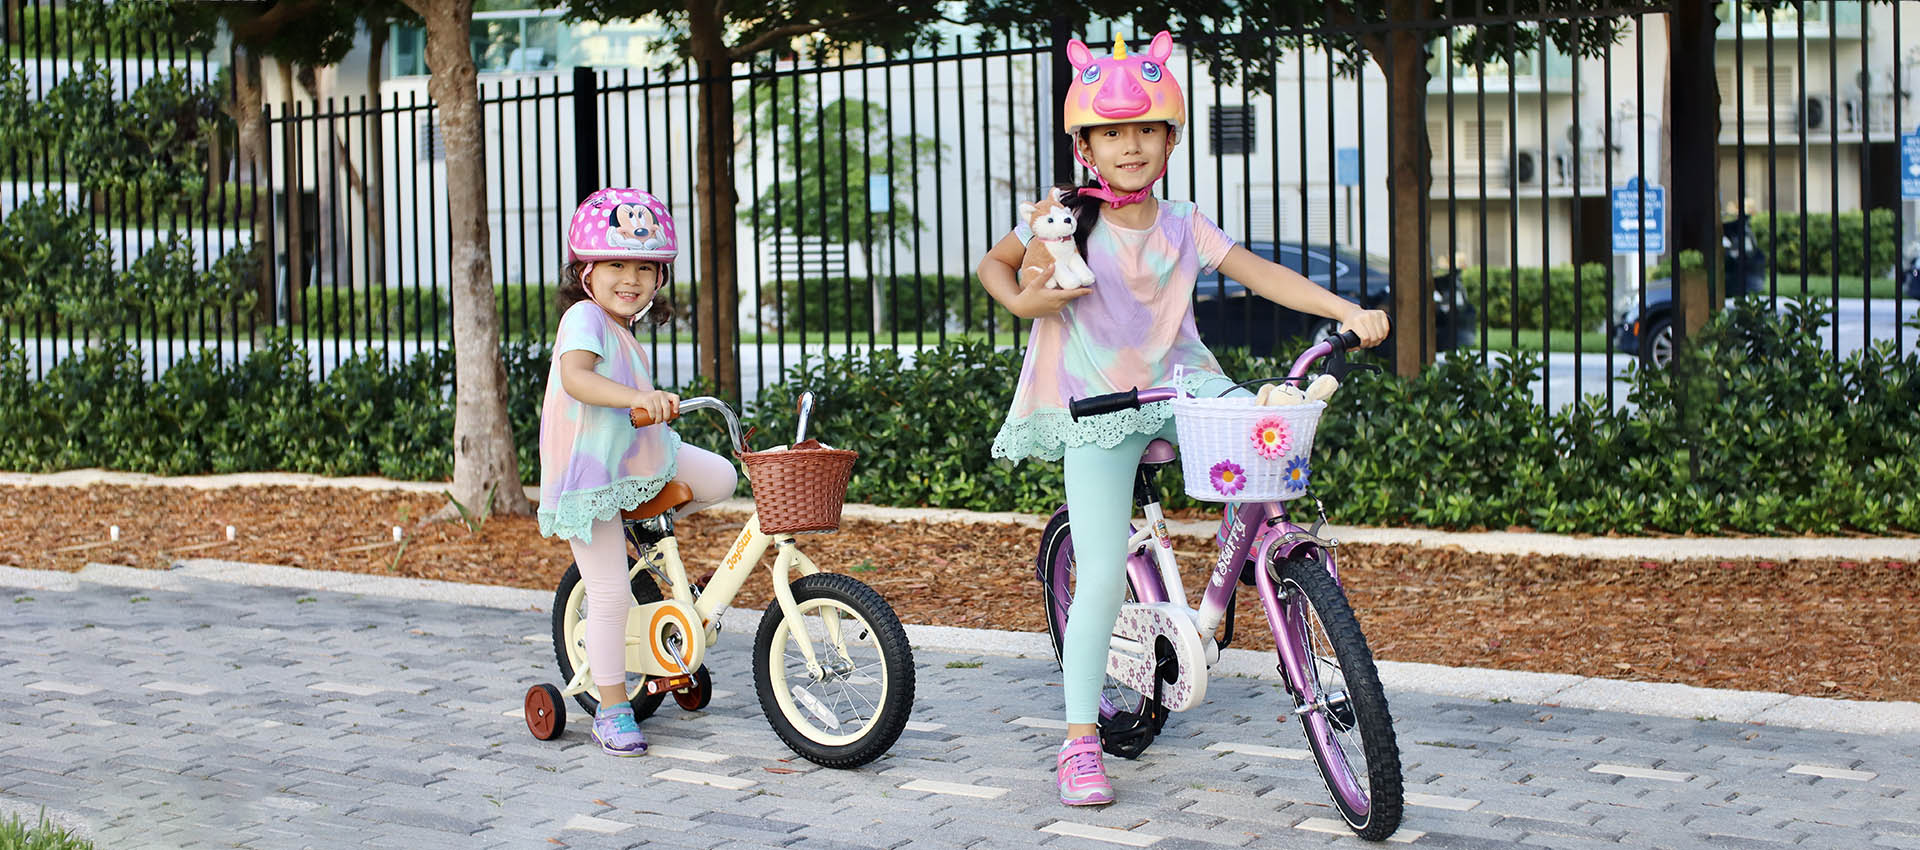 two girls riding joystar kids bike